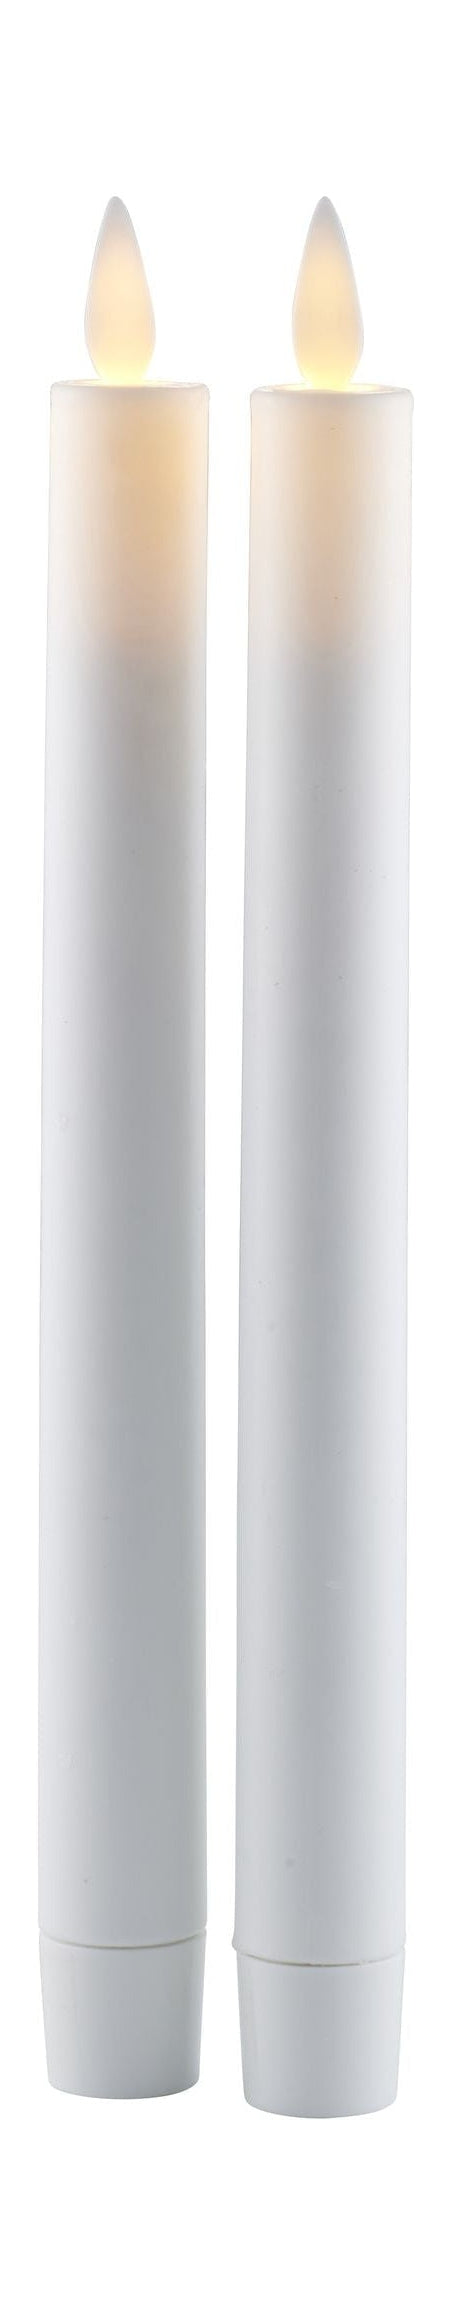 Sirius Sara uppladdningsbar krona LED -ljus vit, Ø2,2x H25 cm